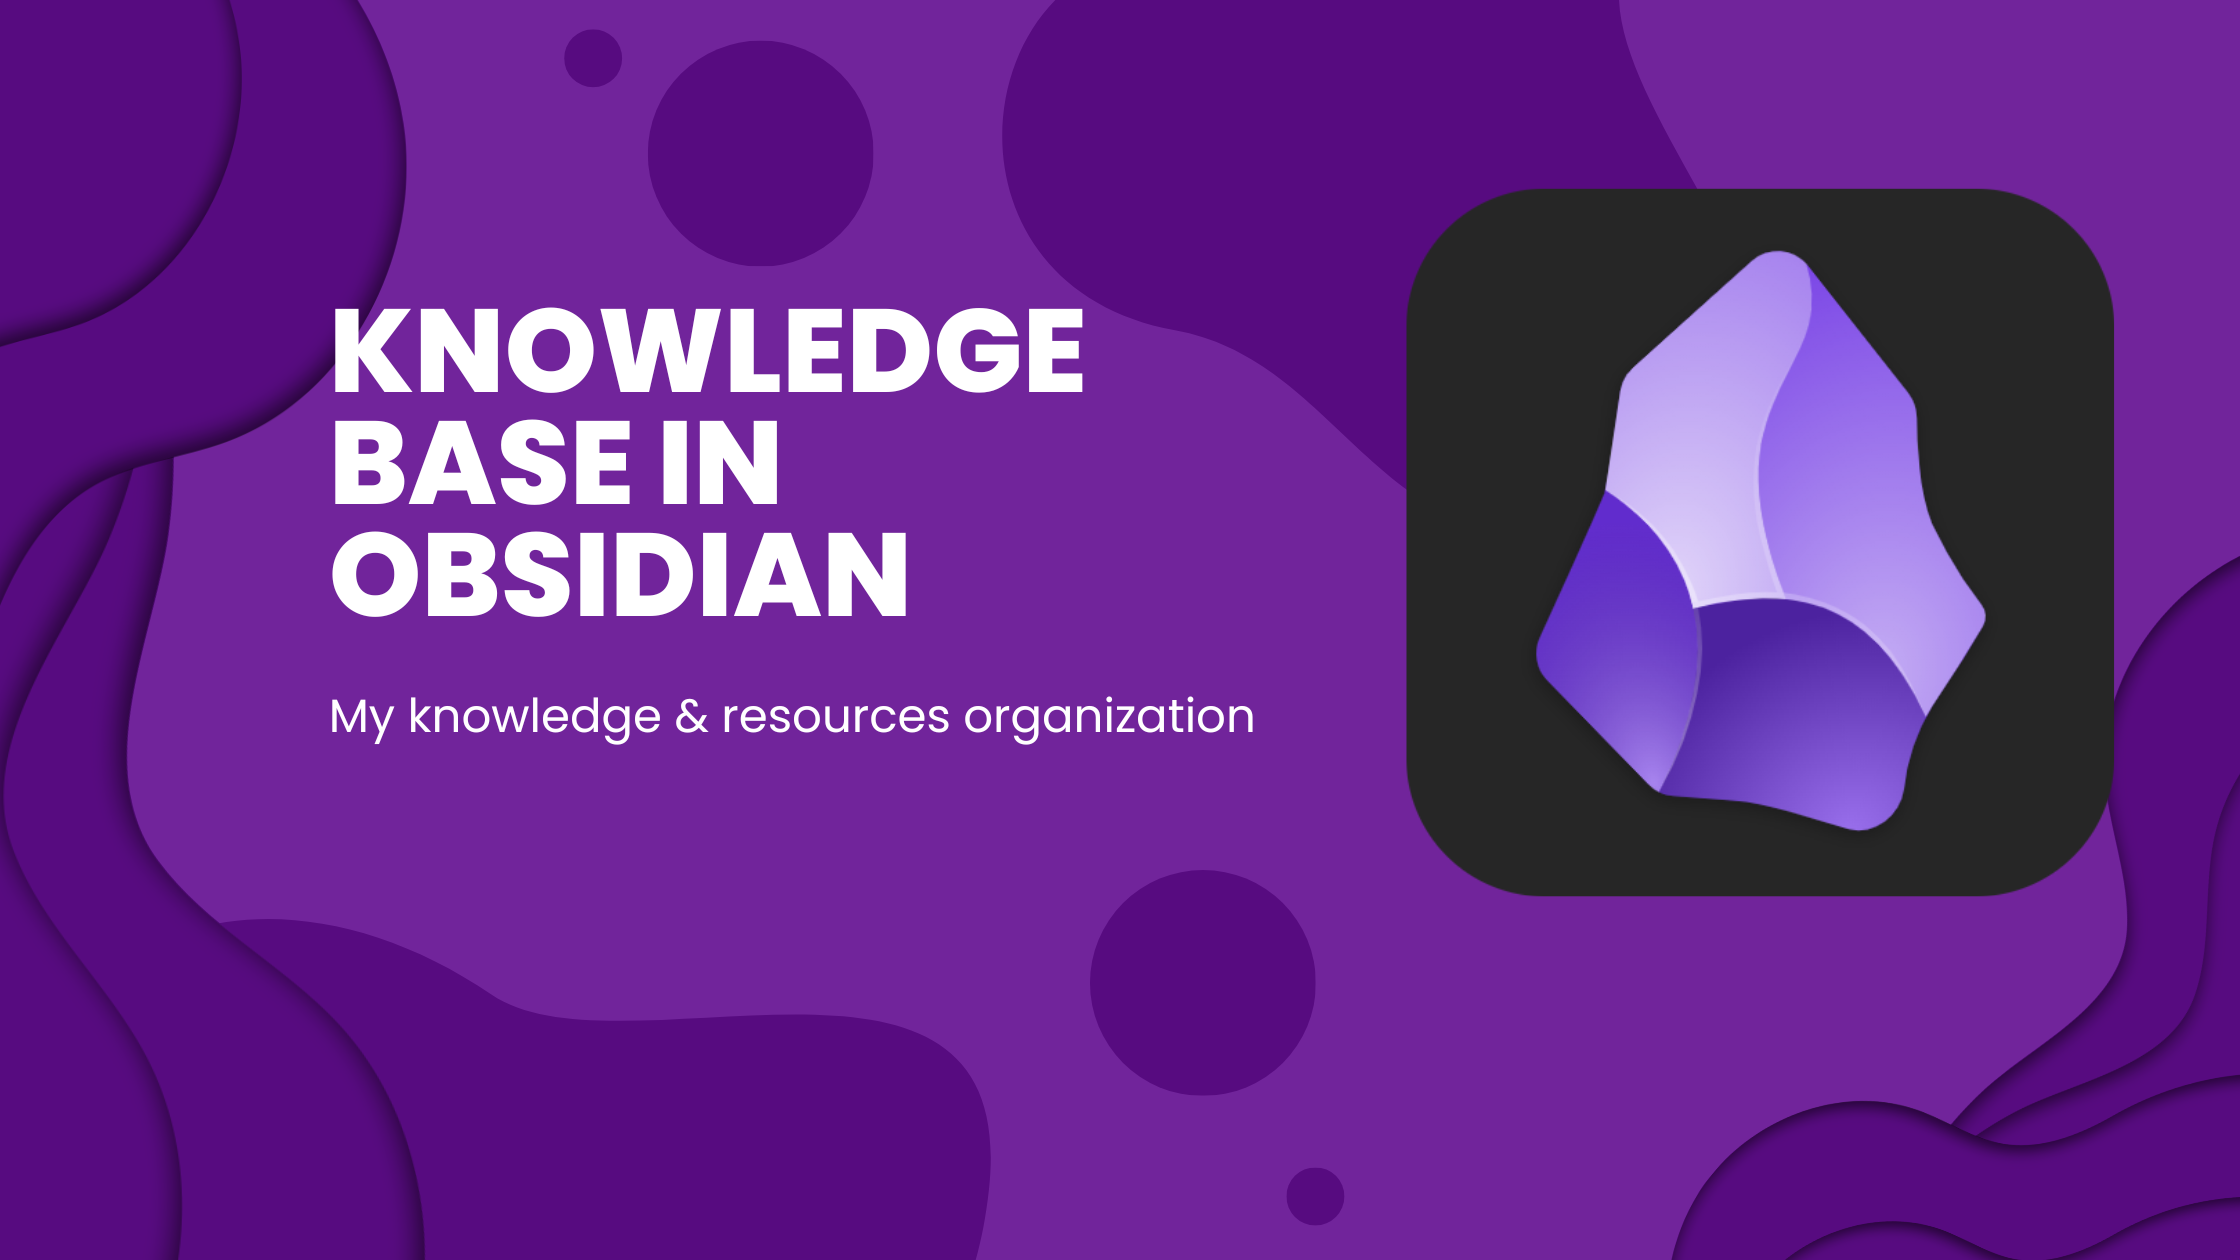 Obsidian: Knowledge base